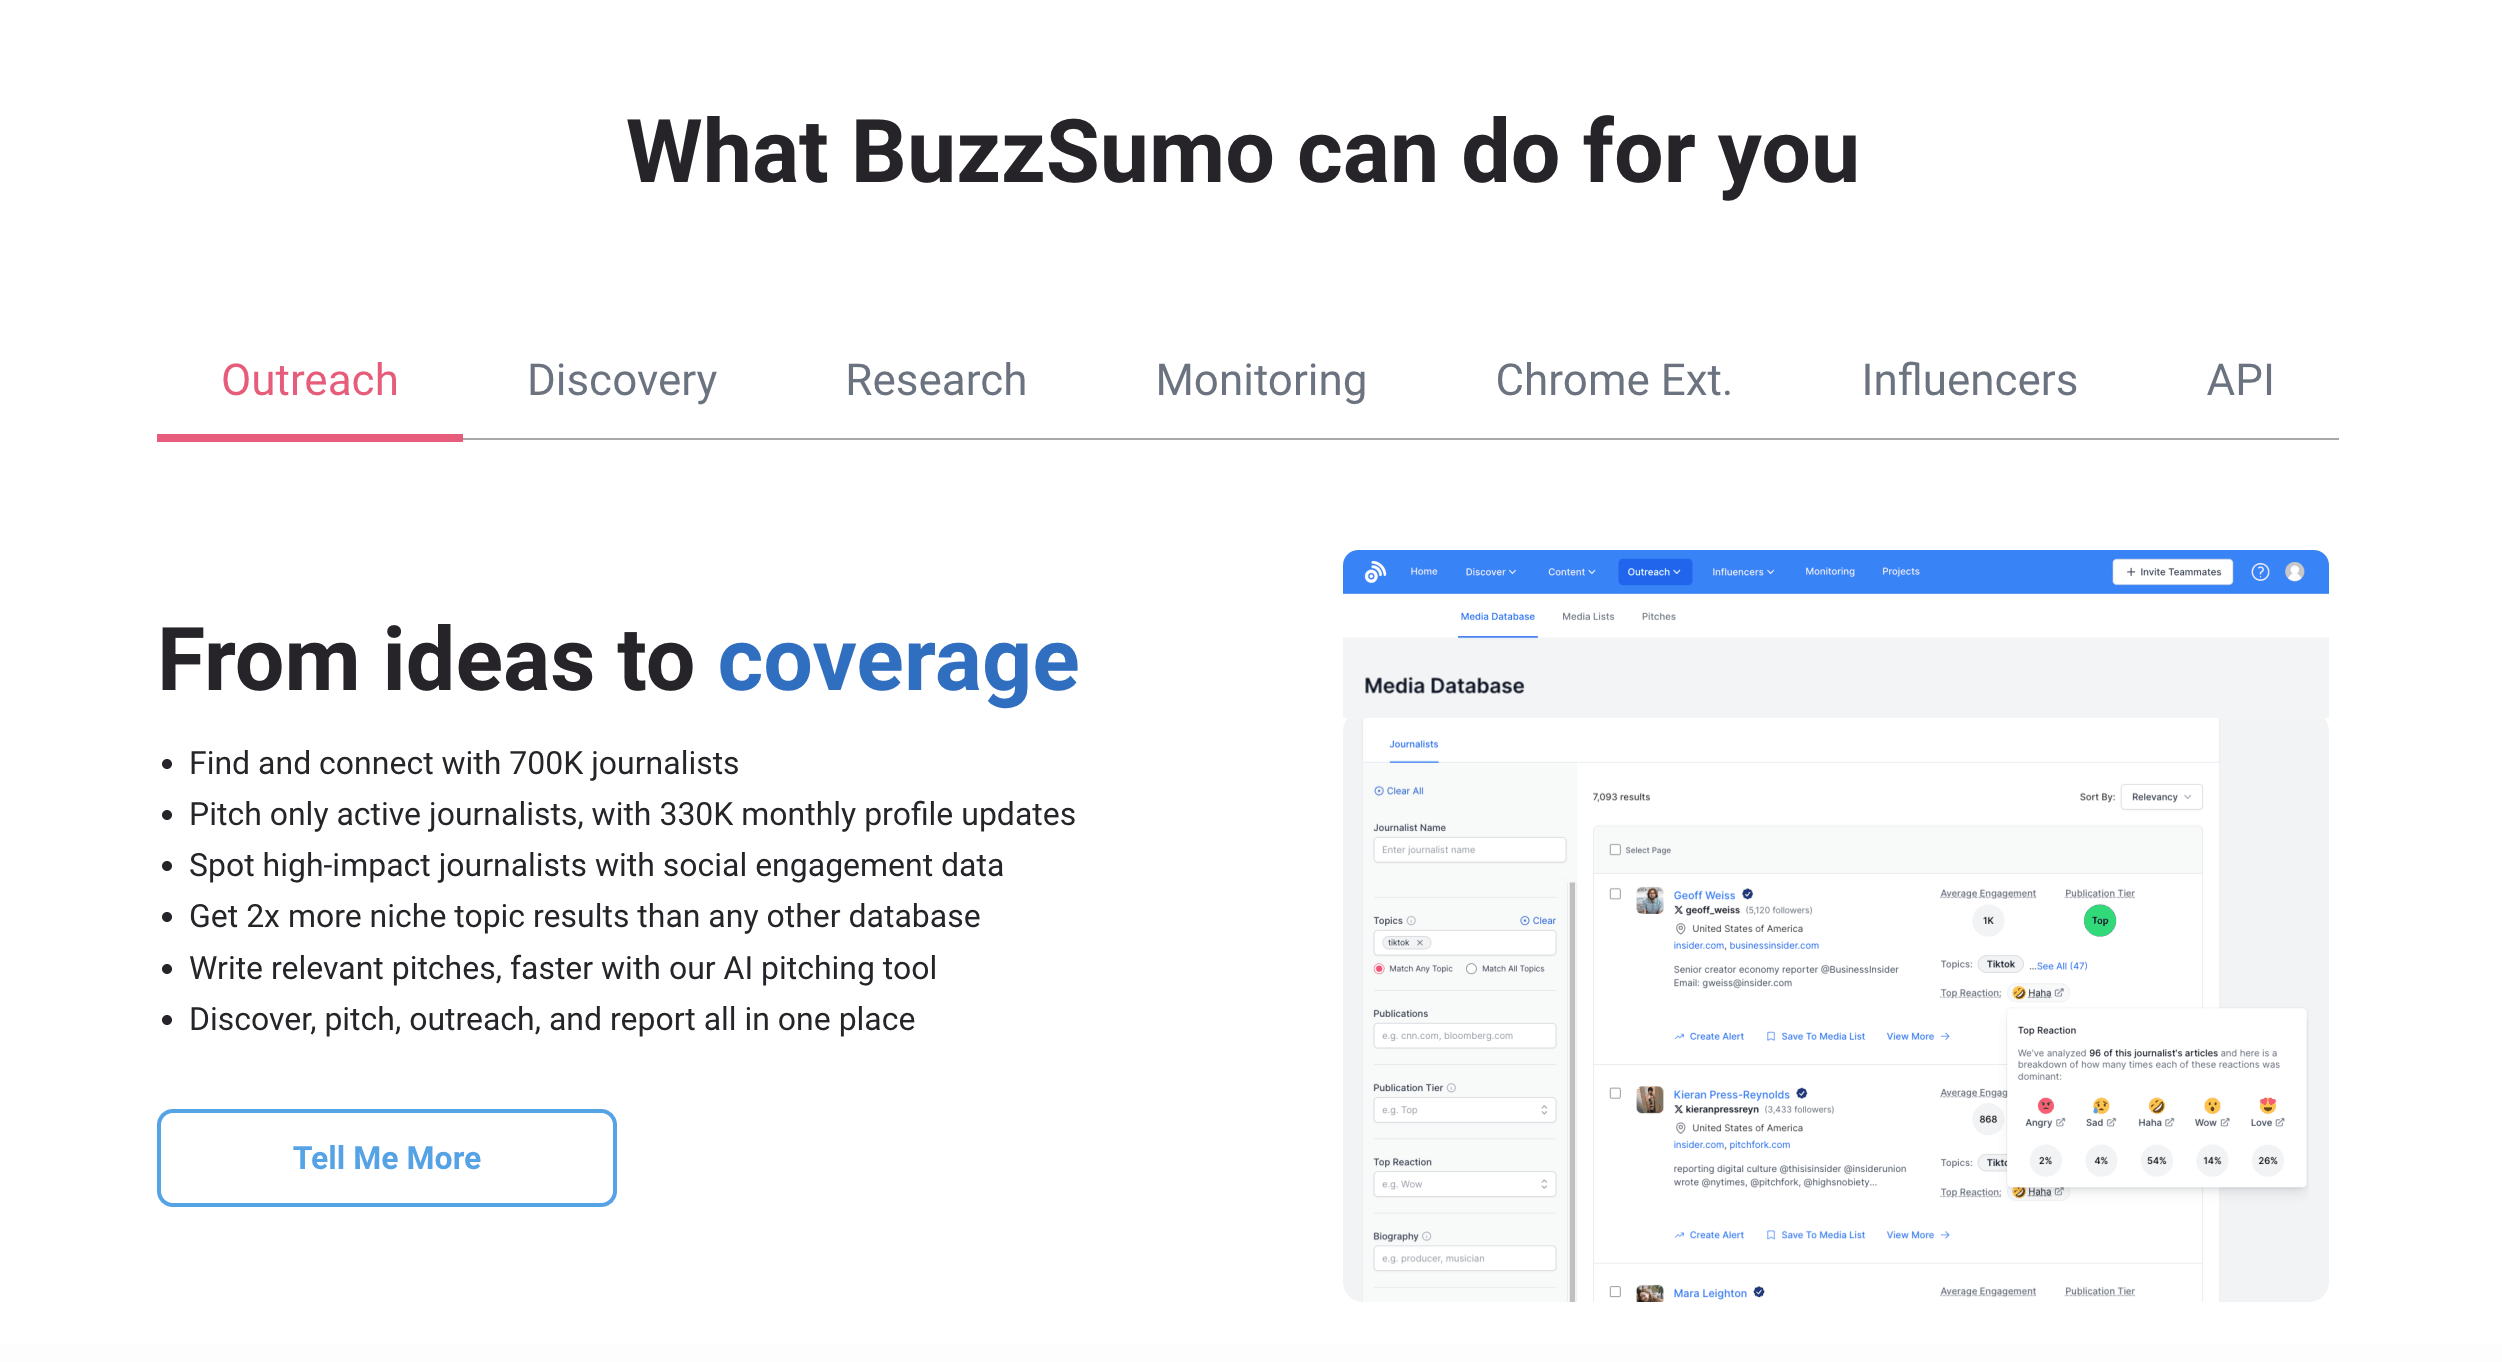 Buzzsumo